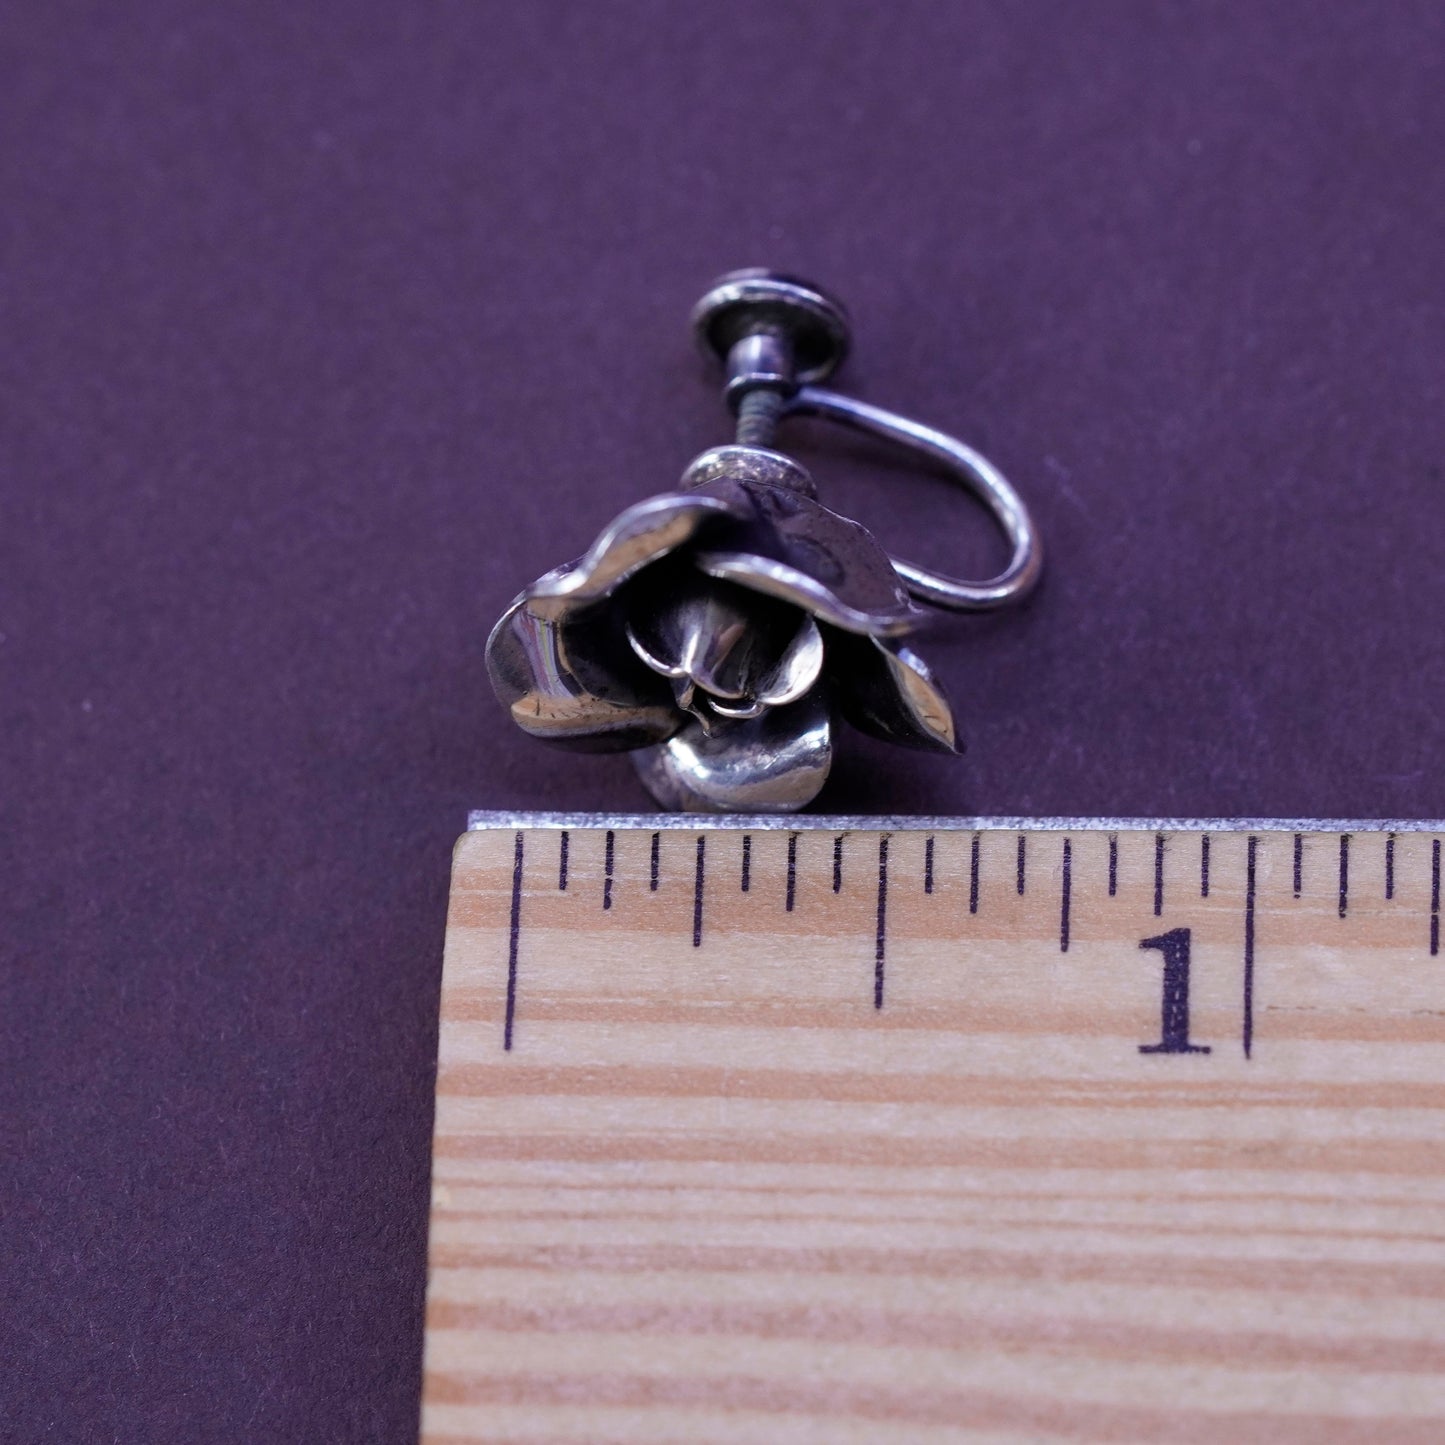 danecraft Sterling silver handmade earrings 925 rose flower screw back earrings